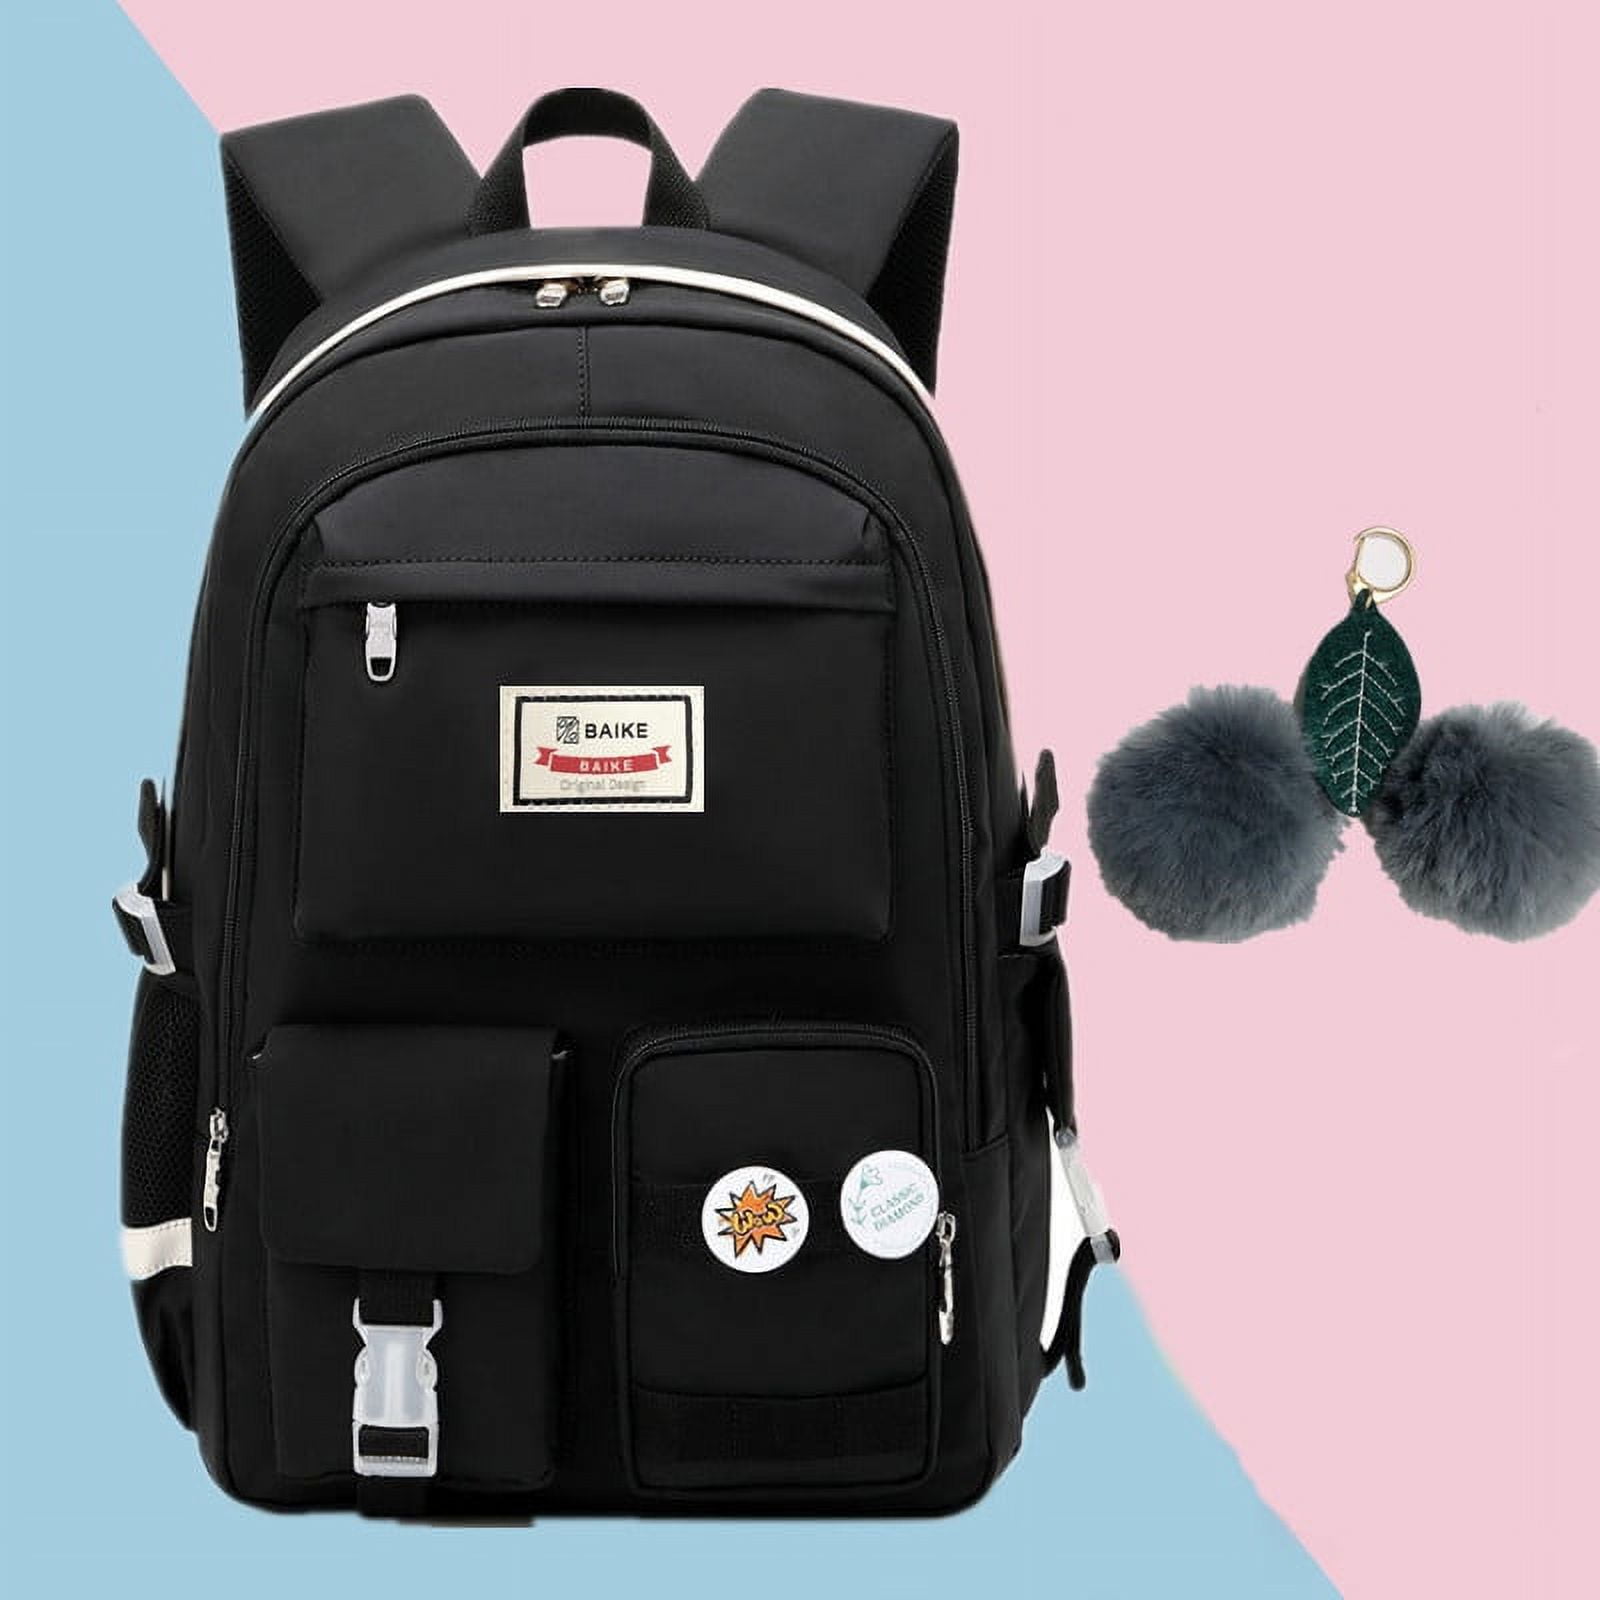 school bag / backpack / collage bag / School bags For Men Women Boys  Girls/Office School College Teens